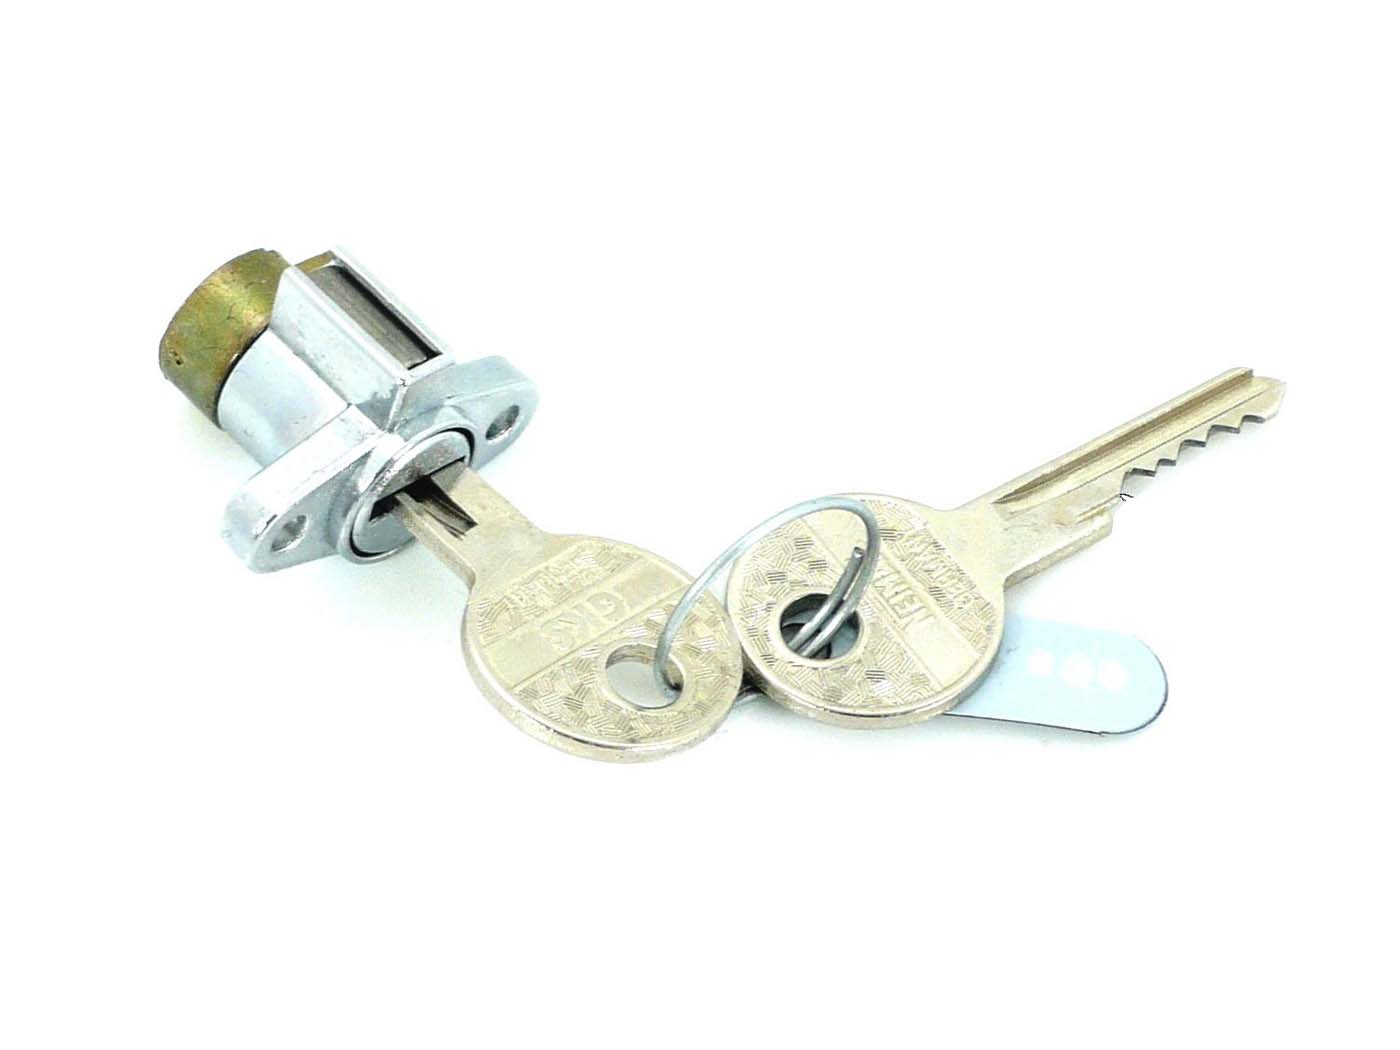 Tool Compartment Lock For Victoria, Avanti 106, 128, 158, Vicky Luxus